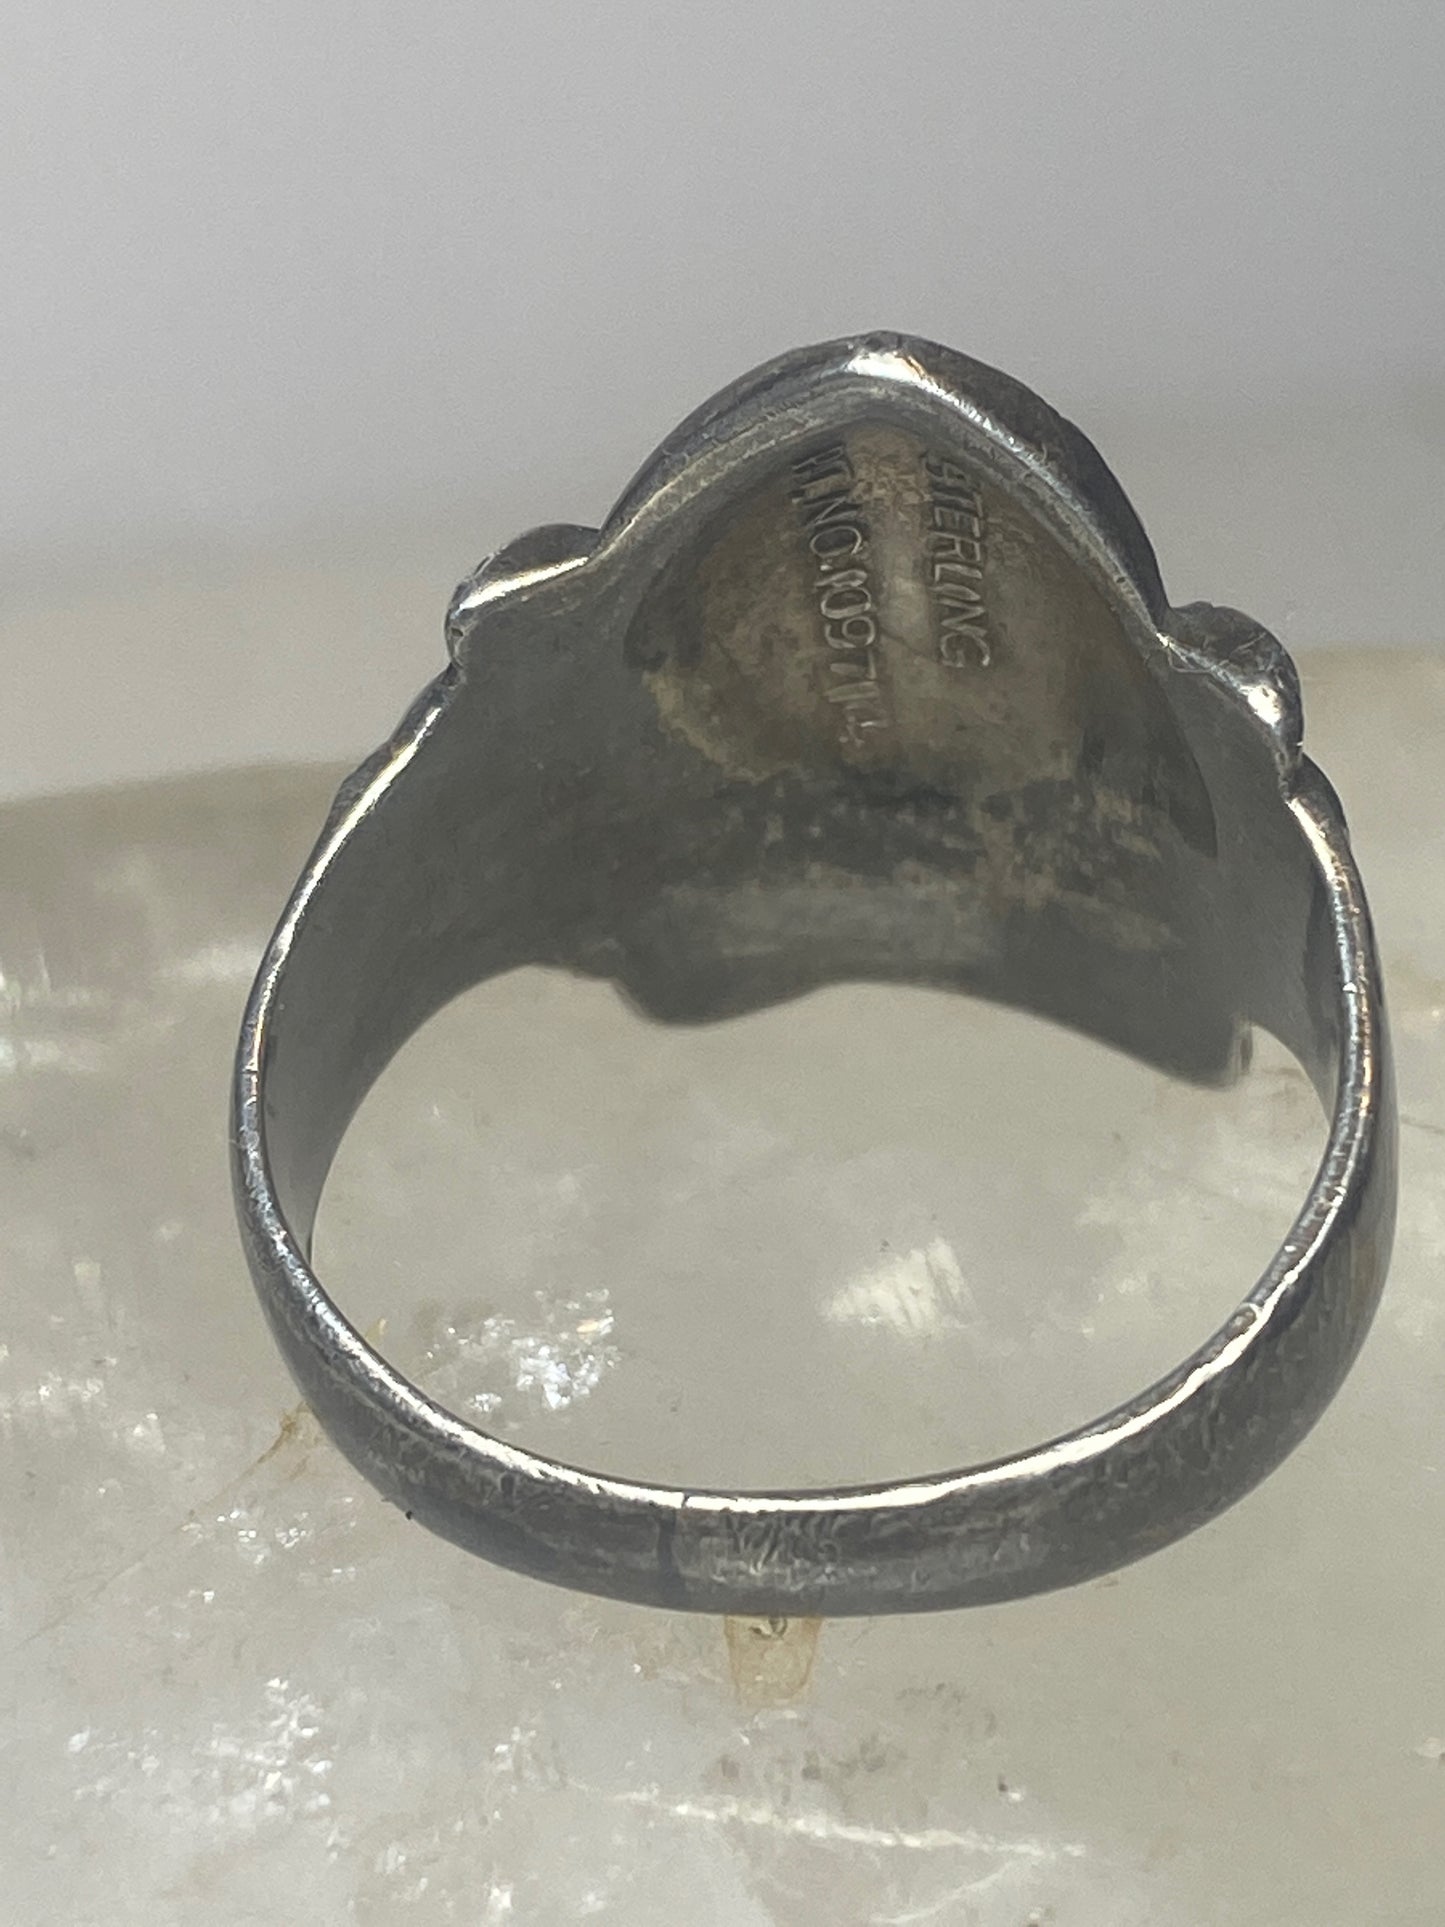 1938 Liberty Democracy Ring size 9.75 Samuel Jaffe Patent sterling silver